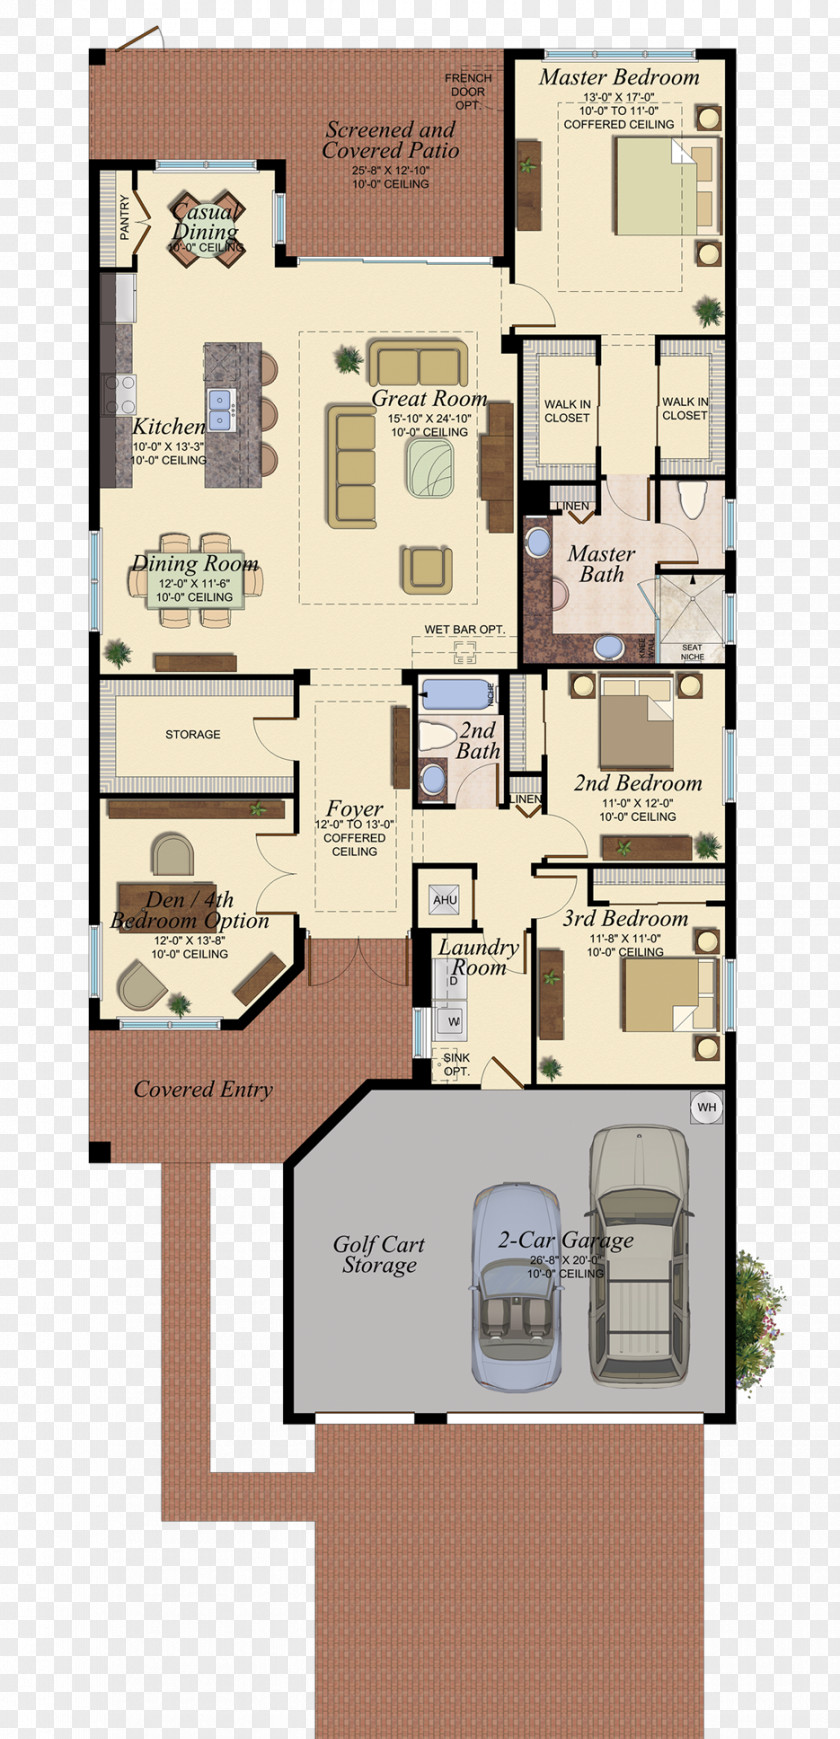 House Floor Plan Cabernet Sauvignon G. L. Homes Of Florida Corporation PNG